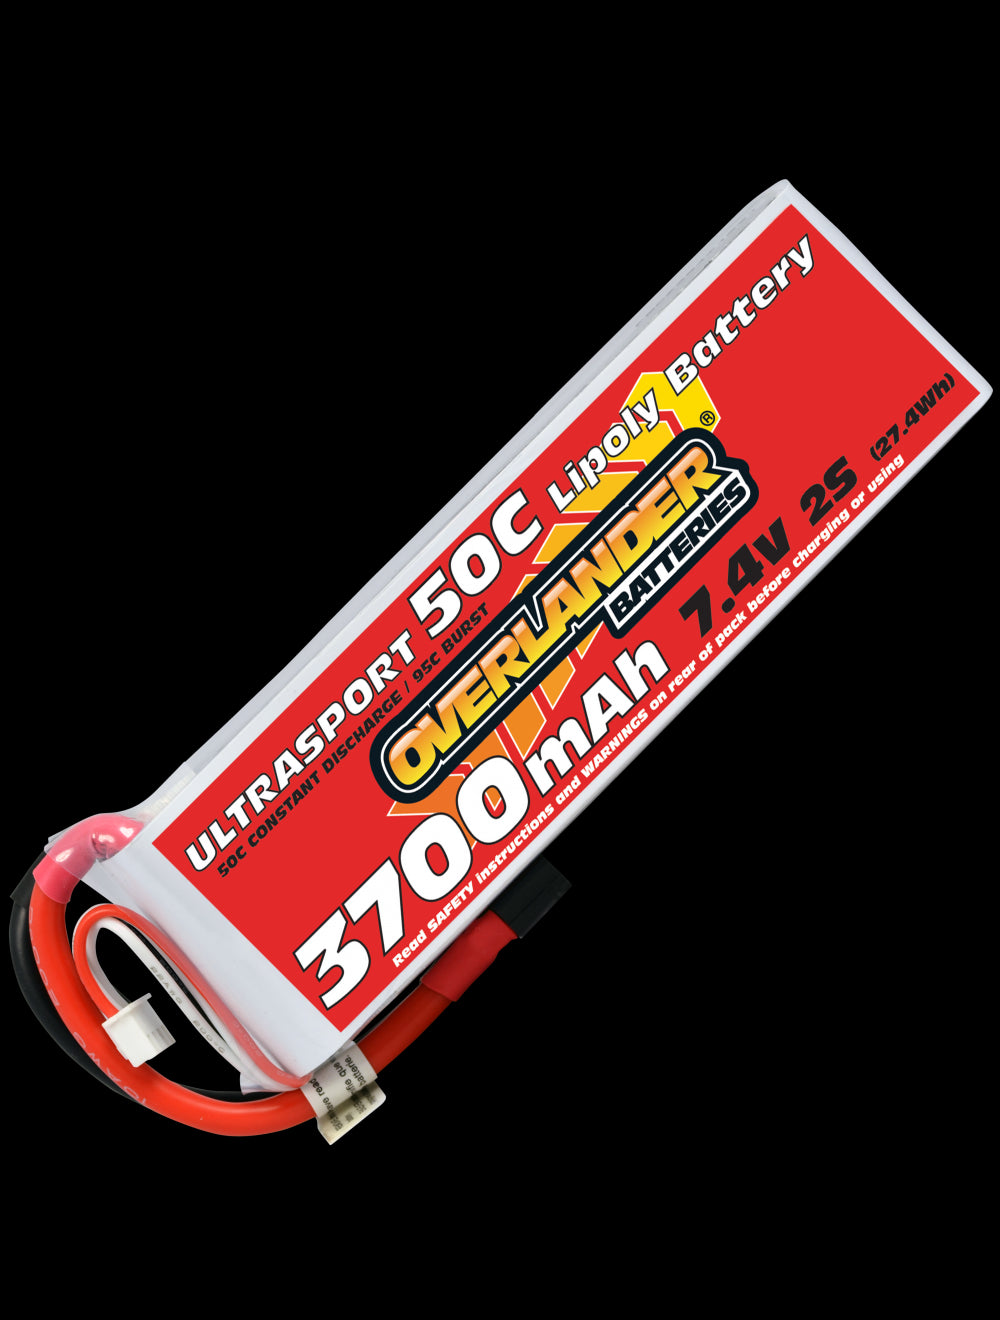 Overlander 3700mAh 7.4V 2S 50C Ultrasport LiPo Battery - Deans Connector 2627